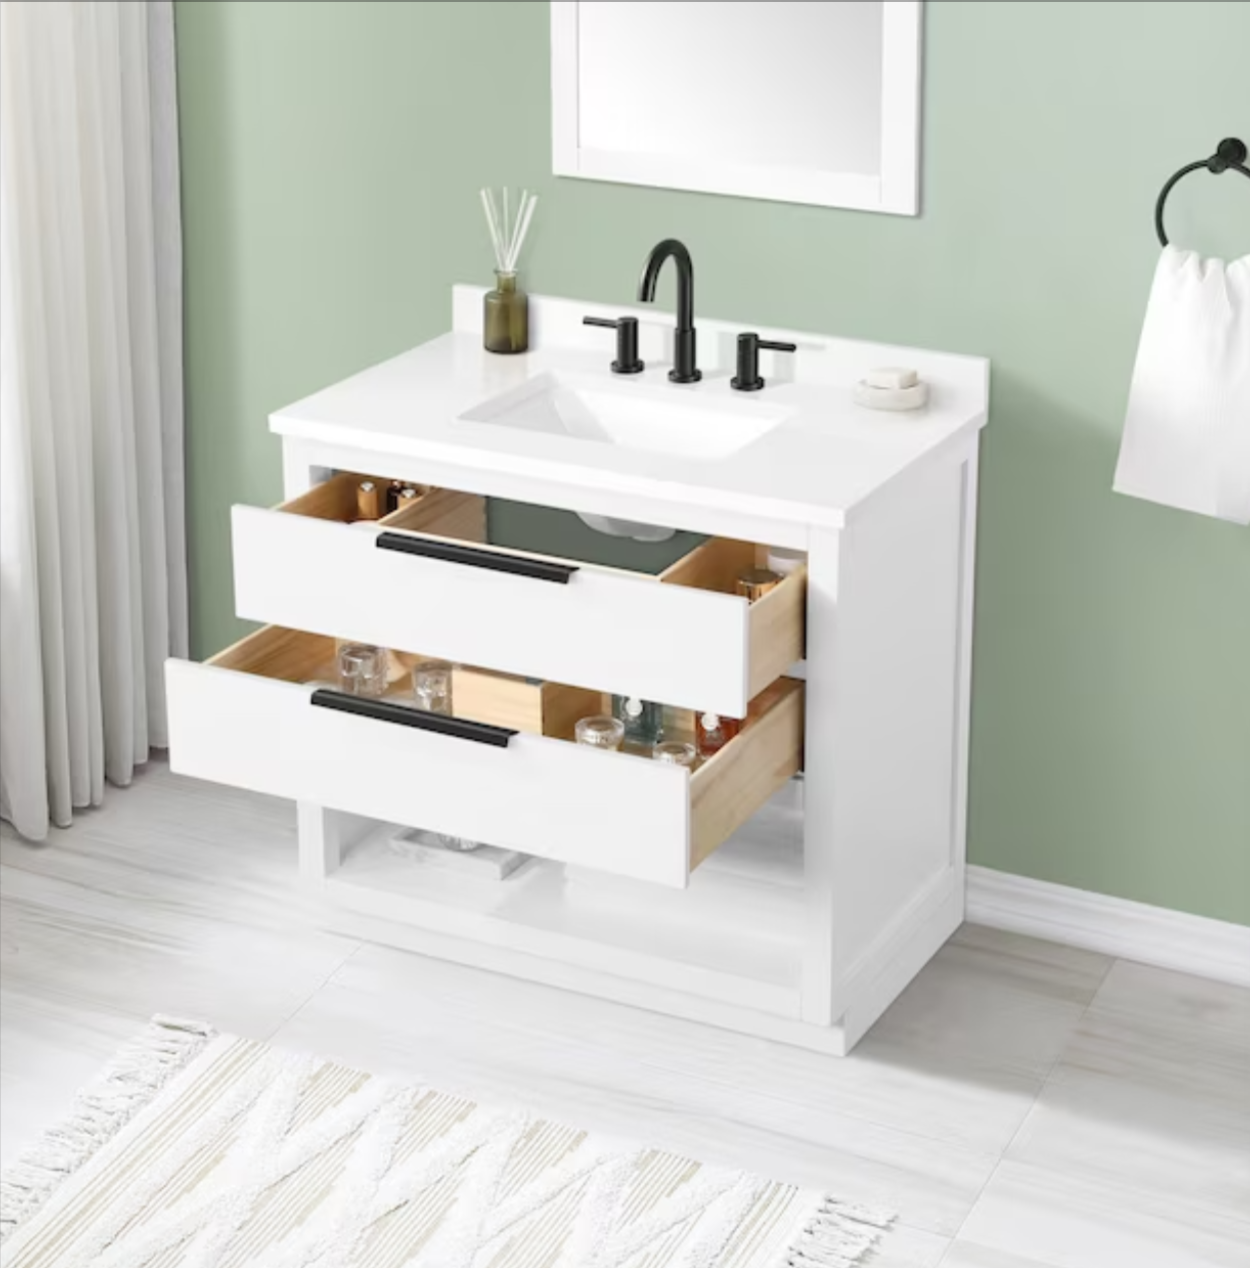 Origin 21 Beecham 36-in White Undermount Single Sink Bathroom Vanity - $400